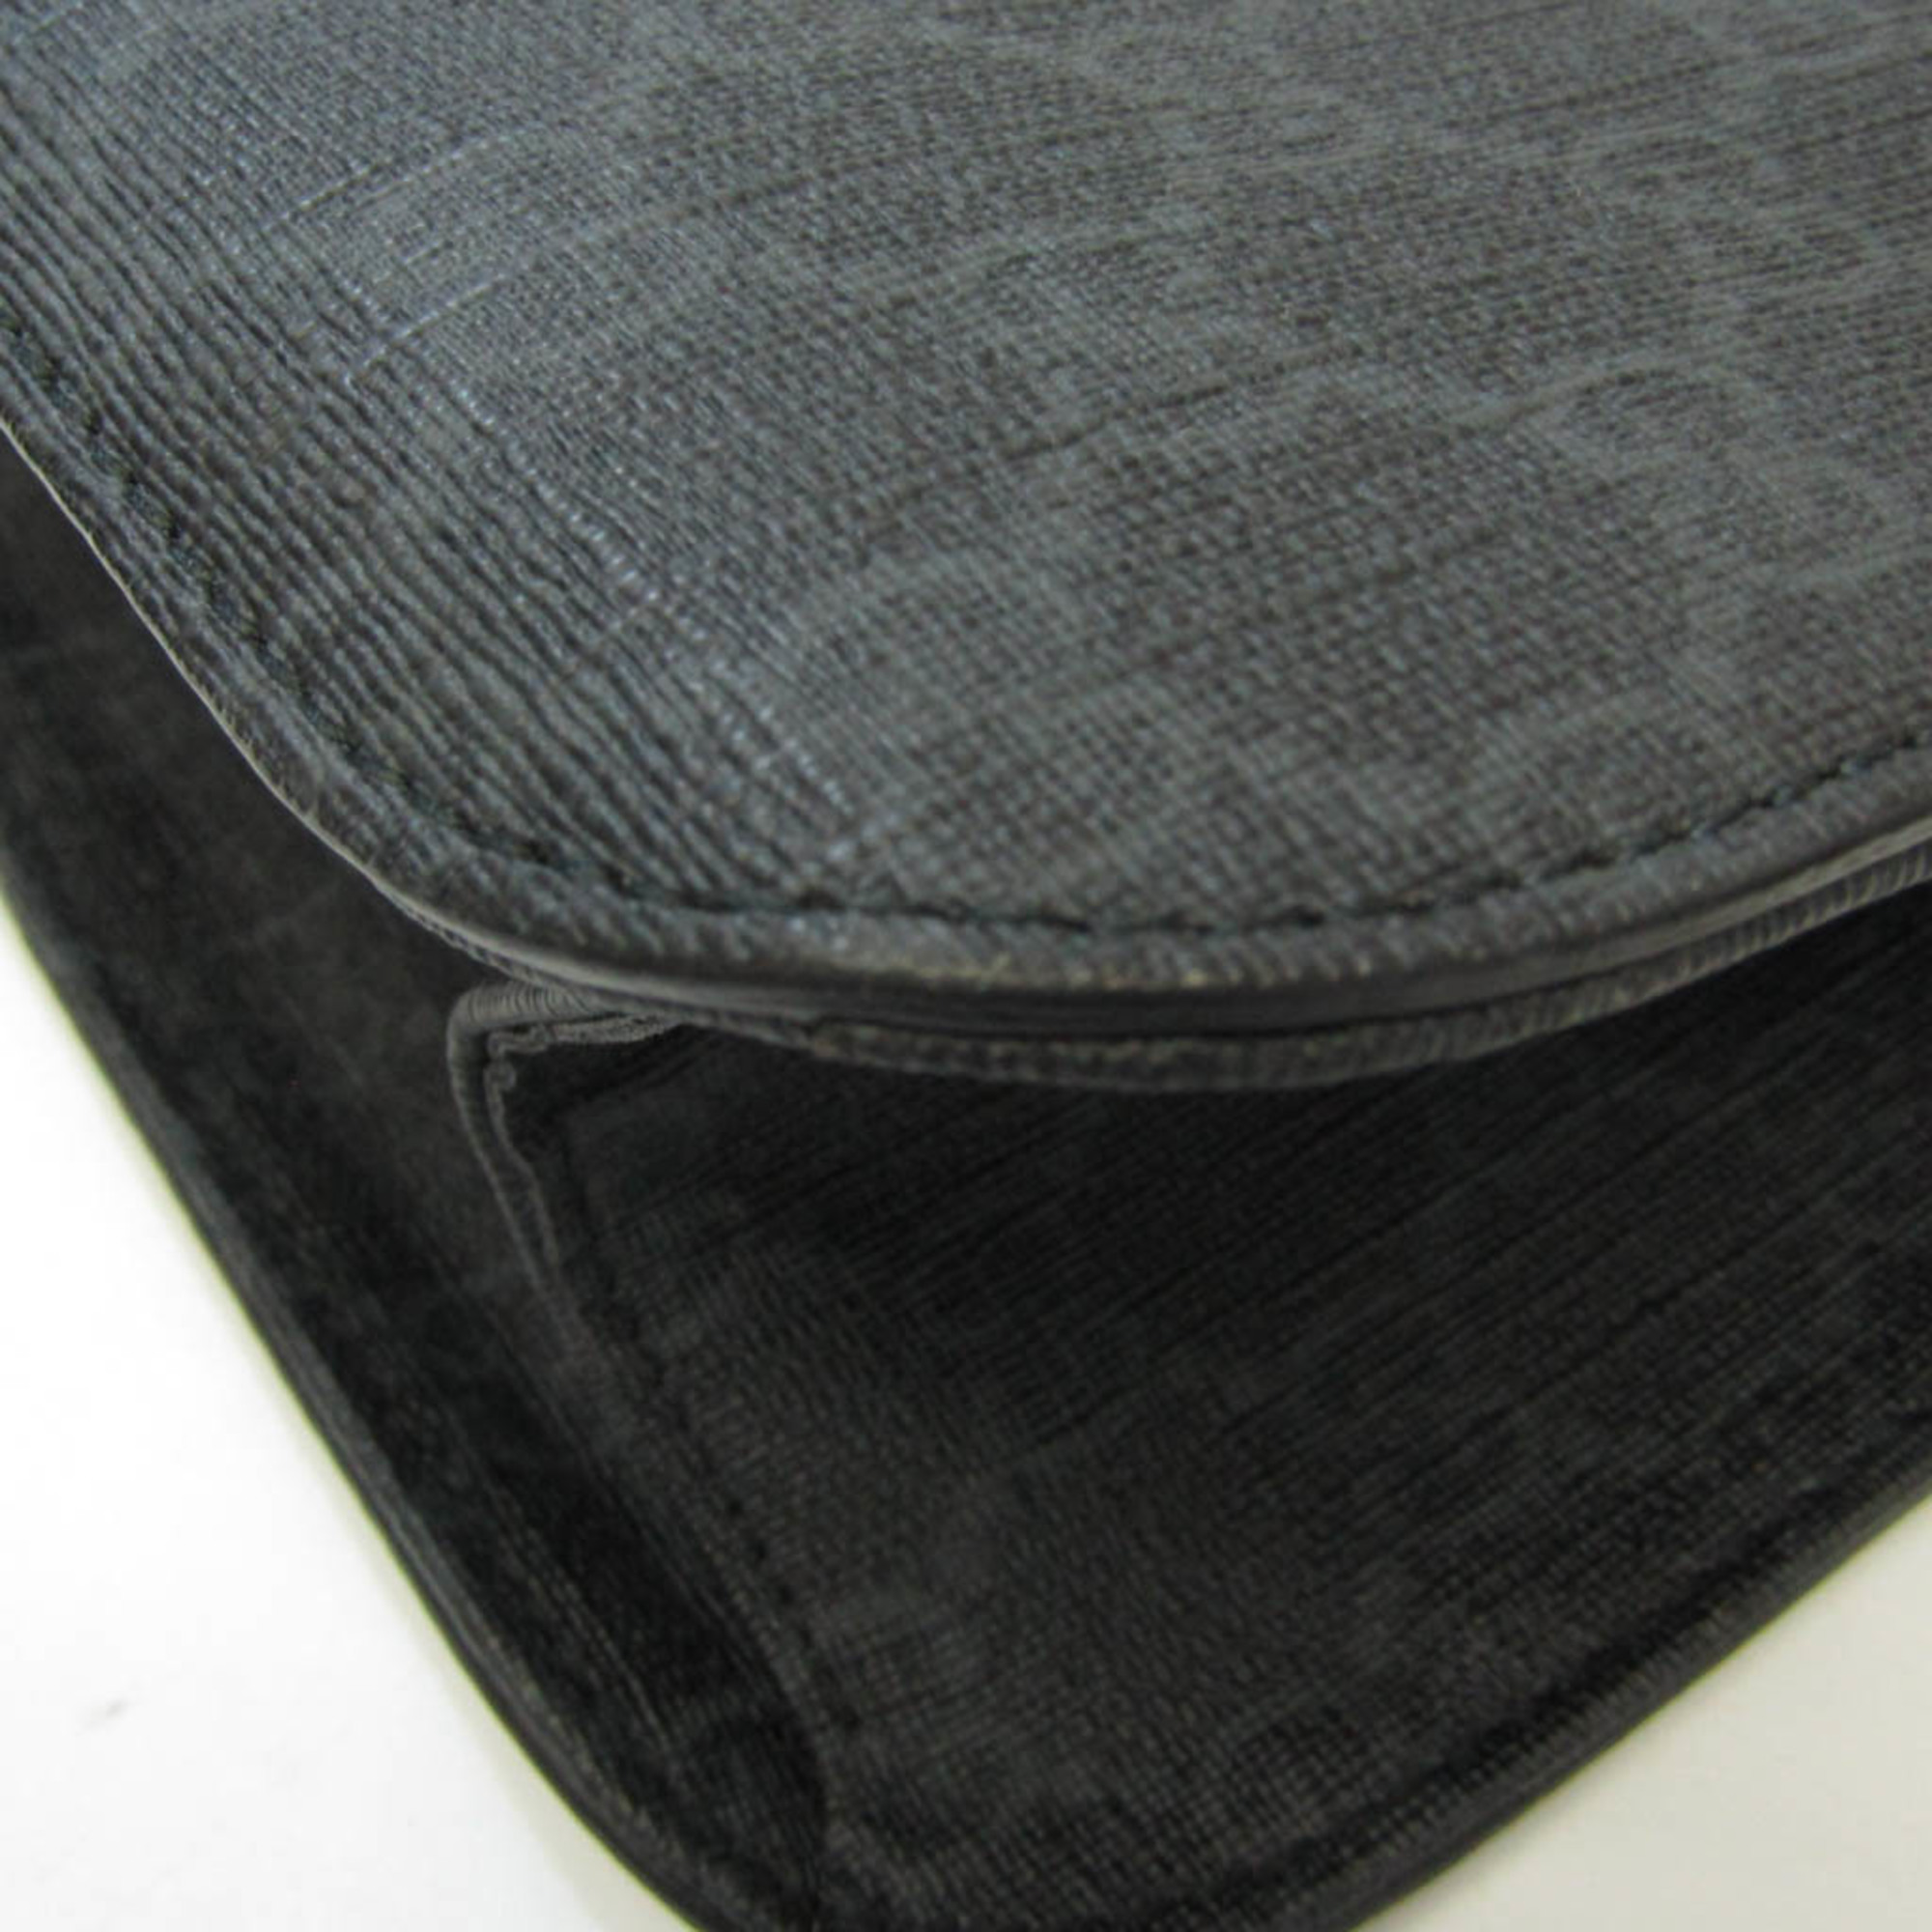 Gucci GG Supreme 322072 Men's Coated Canvas Handbag,Tote Bag Black,Dark Gray